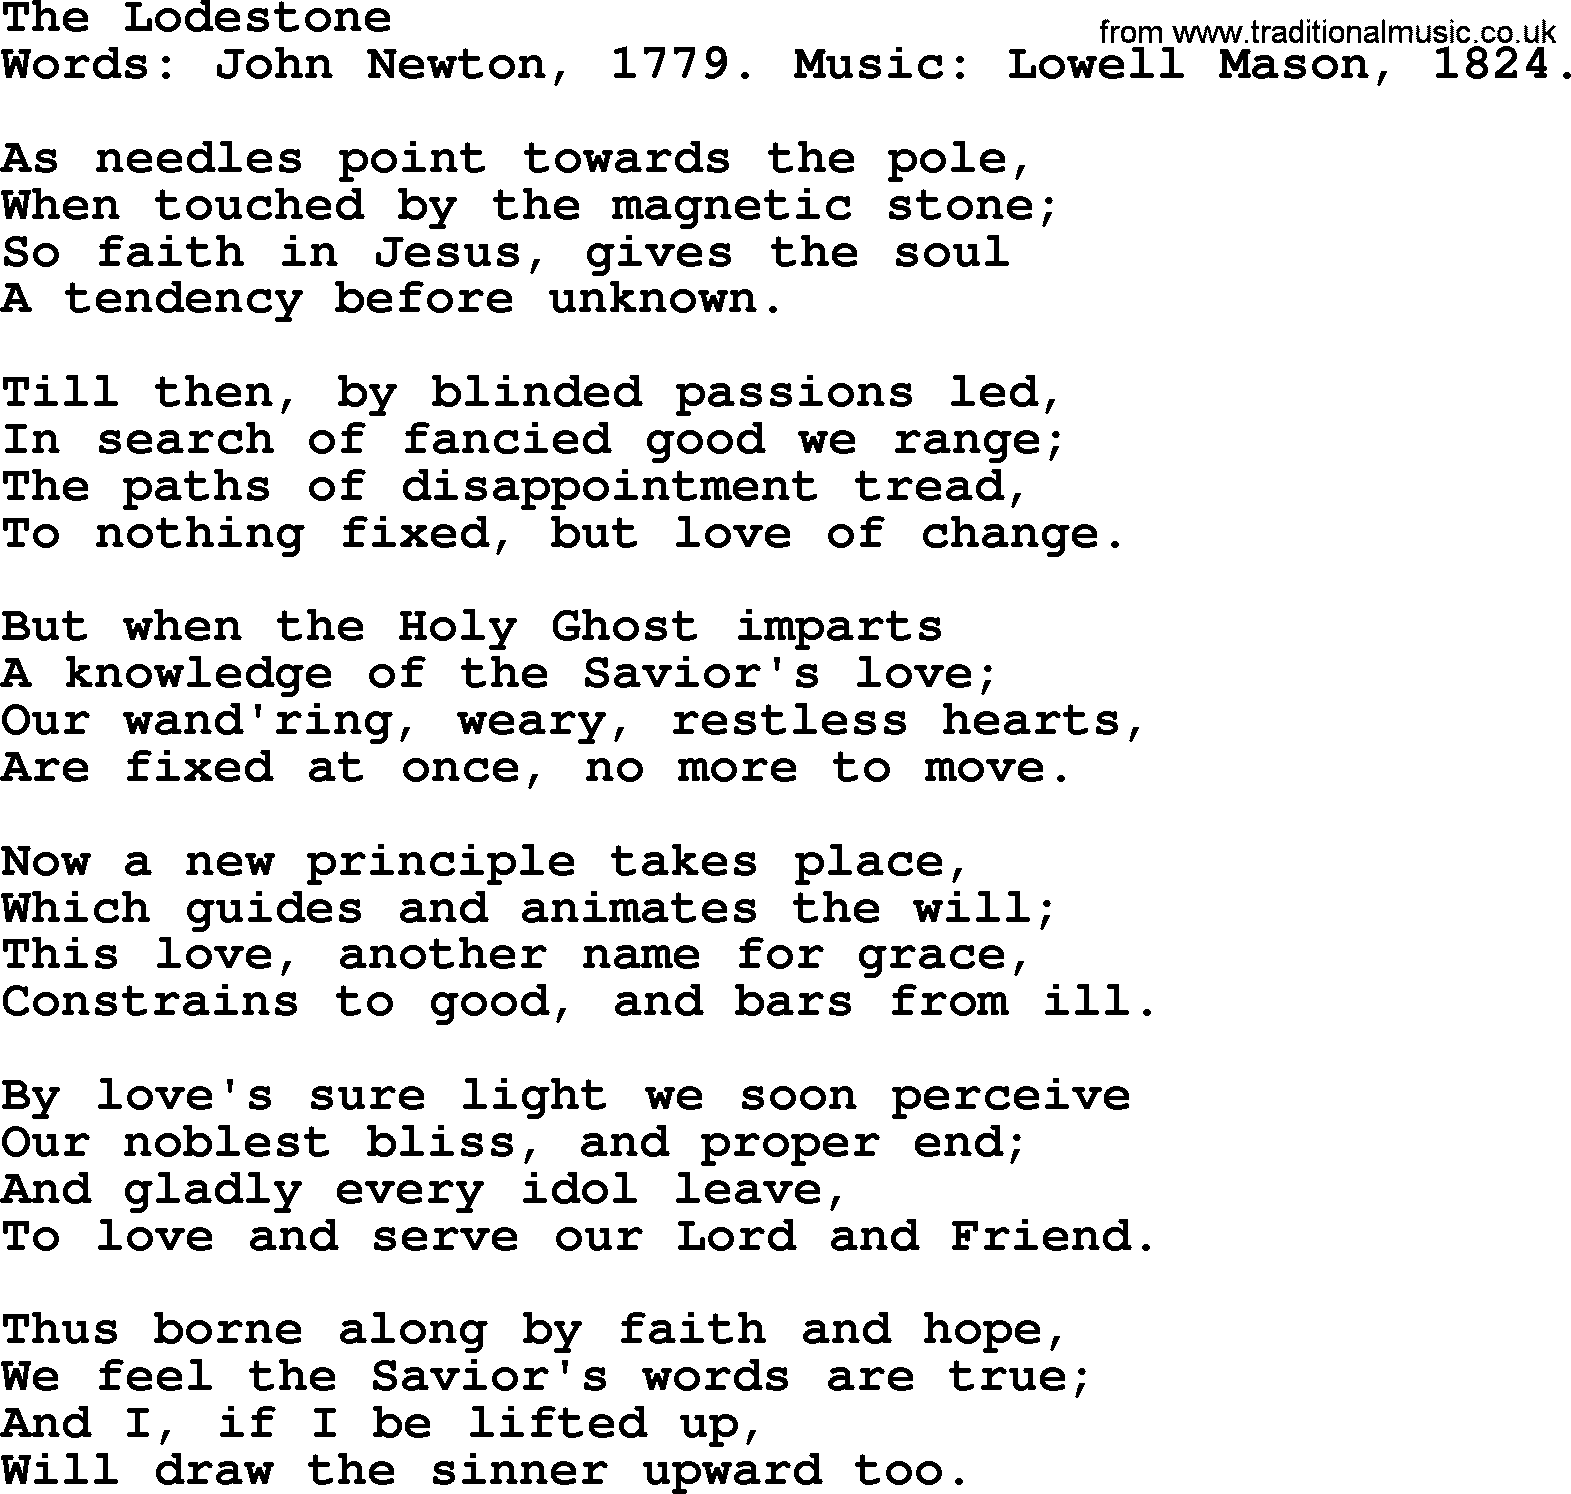 John Newton hymn: The Lodestone, lyrics